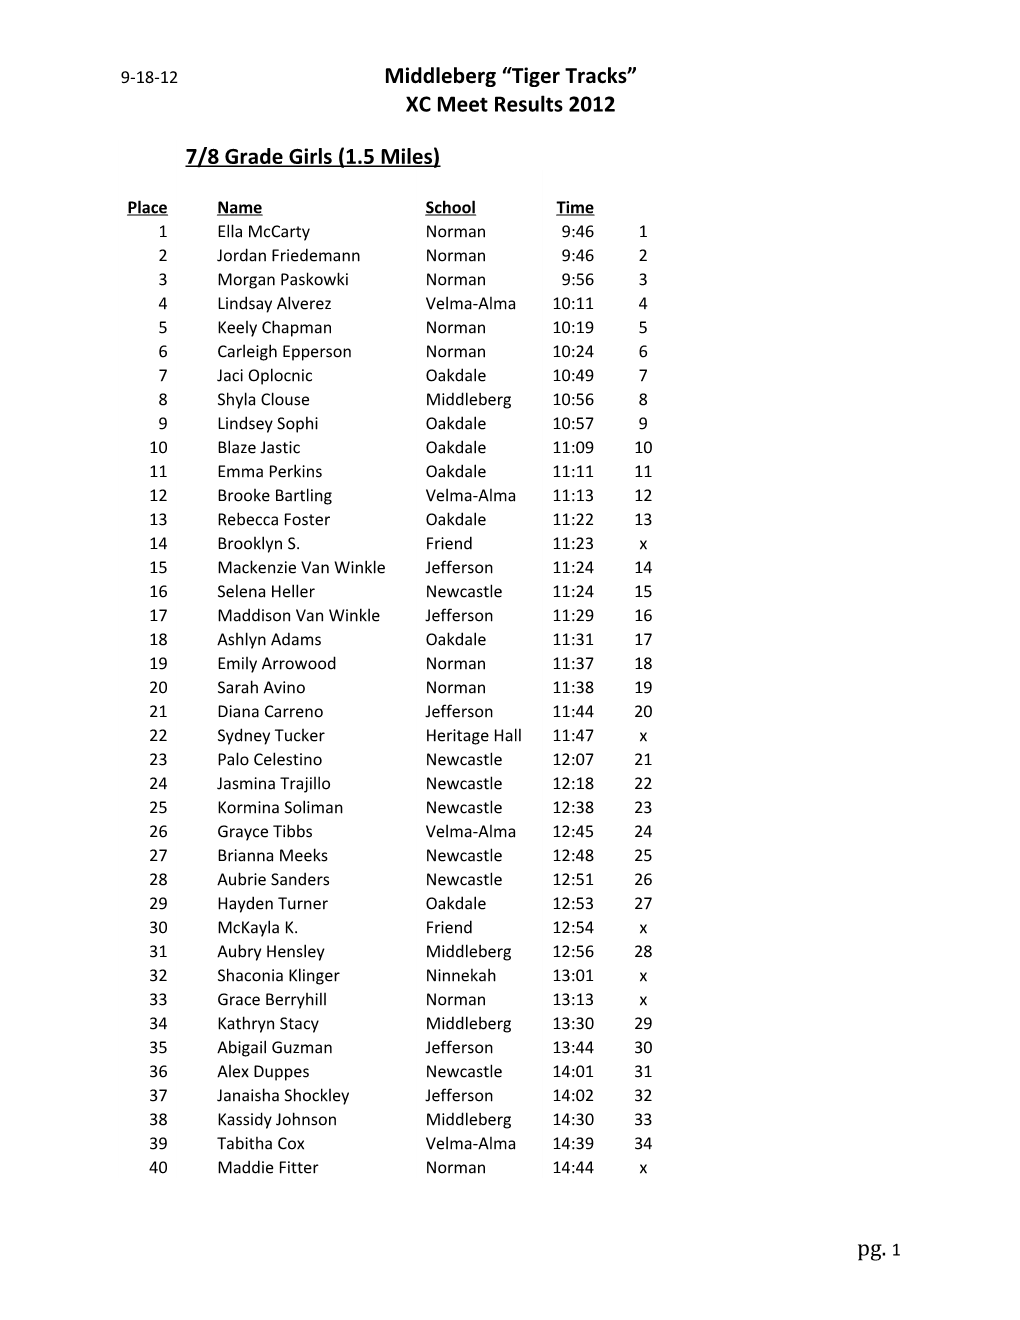 XC Meet Results 2012